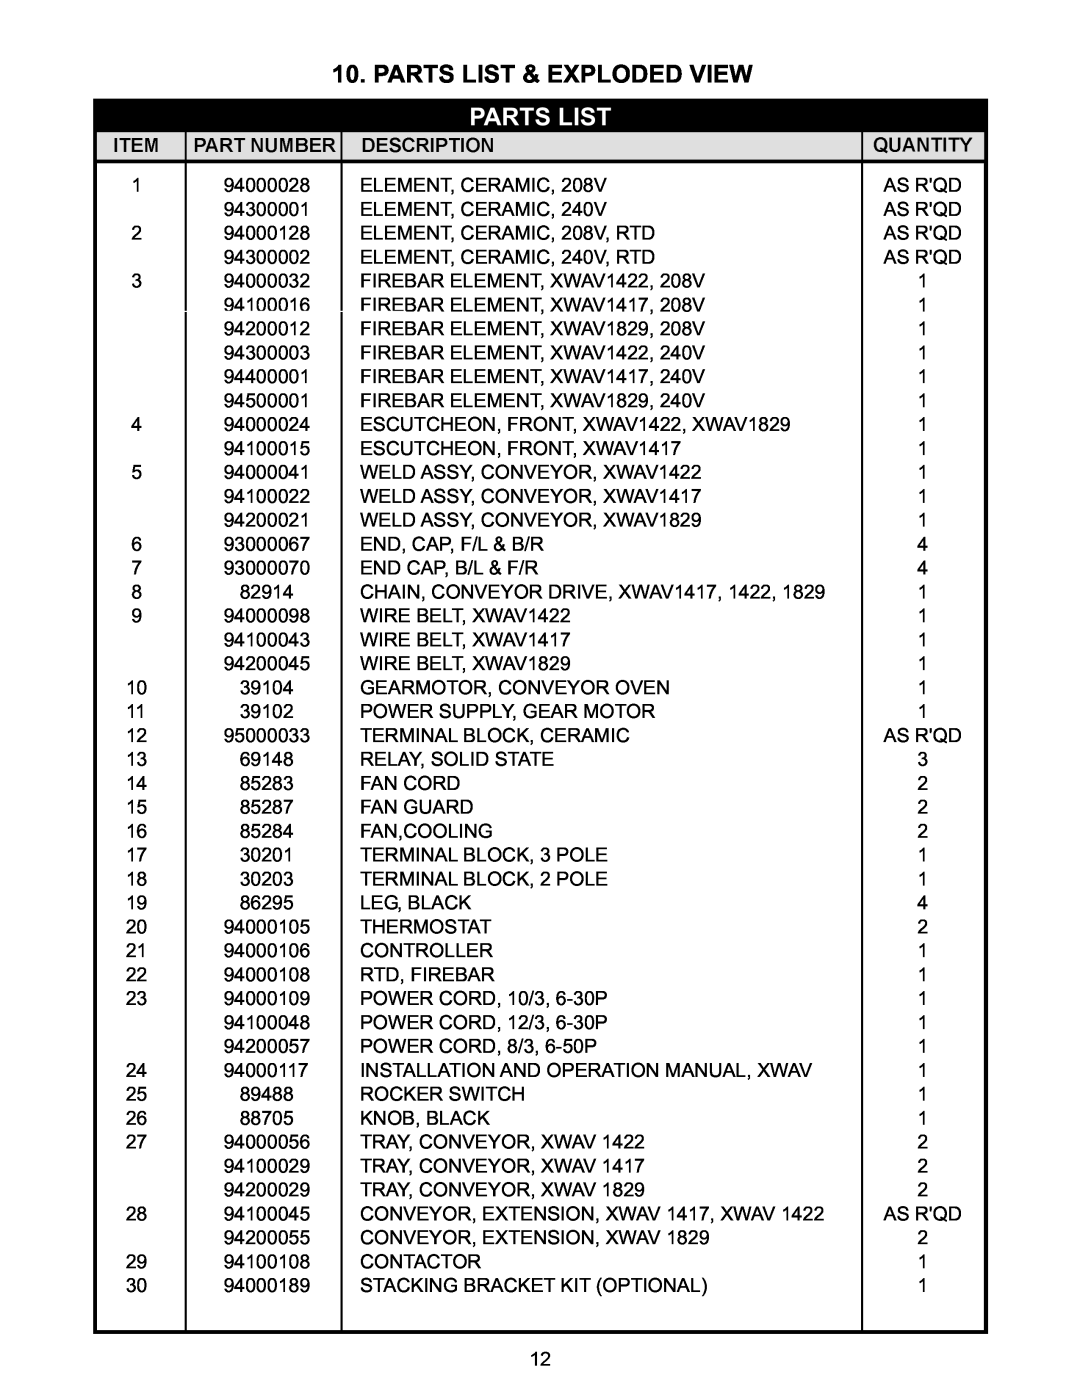 APW Wyott XWAV1829, XWAV1422, XWAV1417 manual Parts List, Quantity 